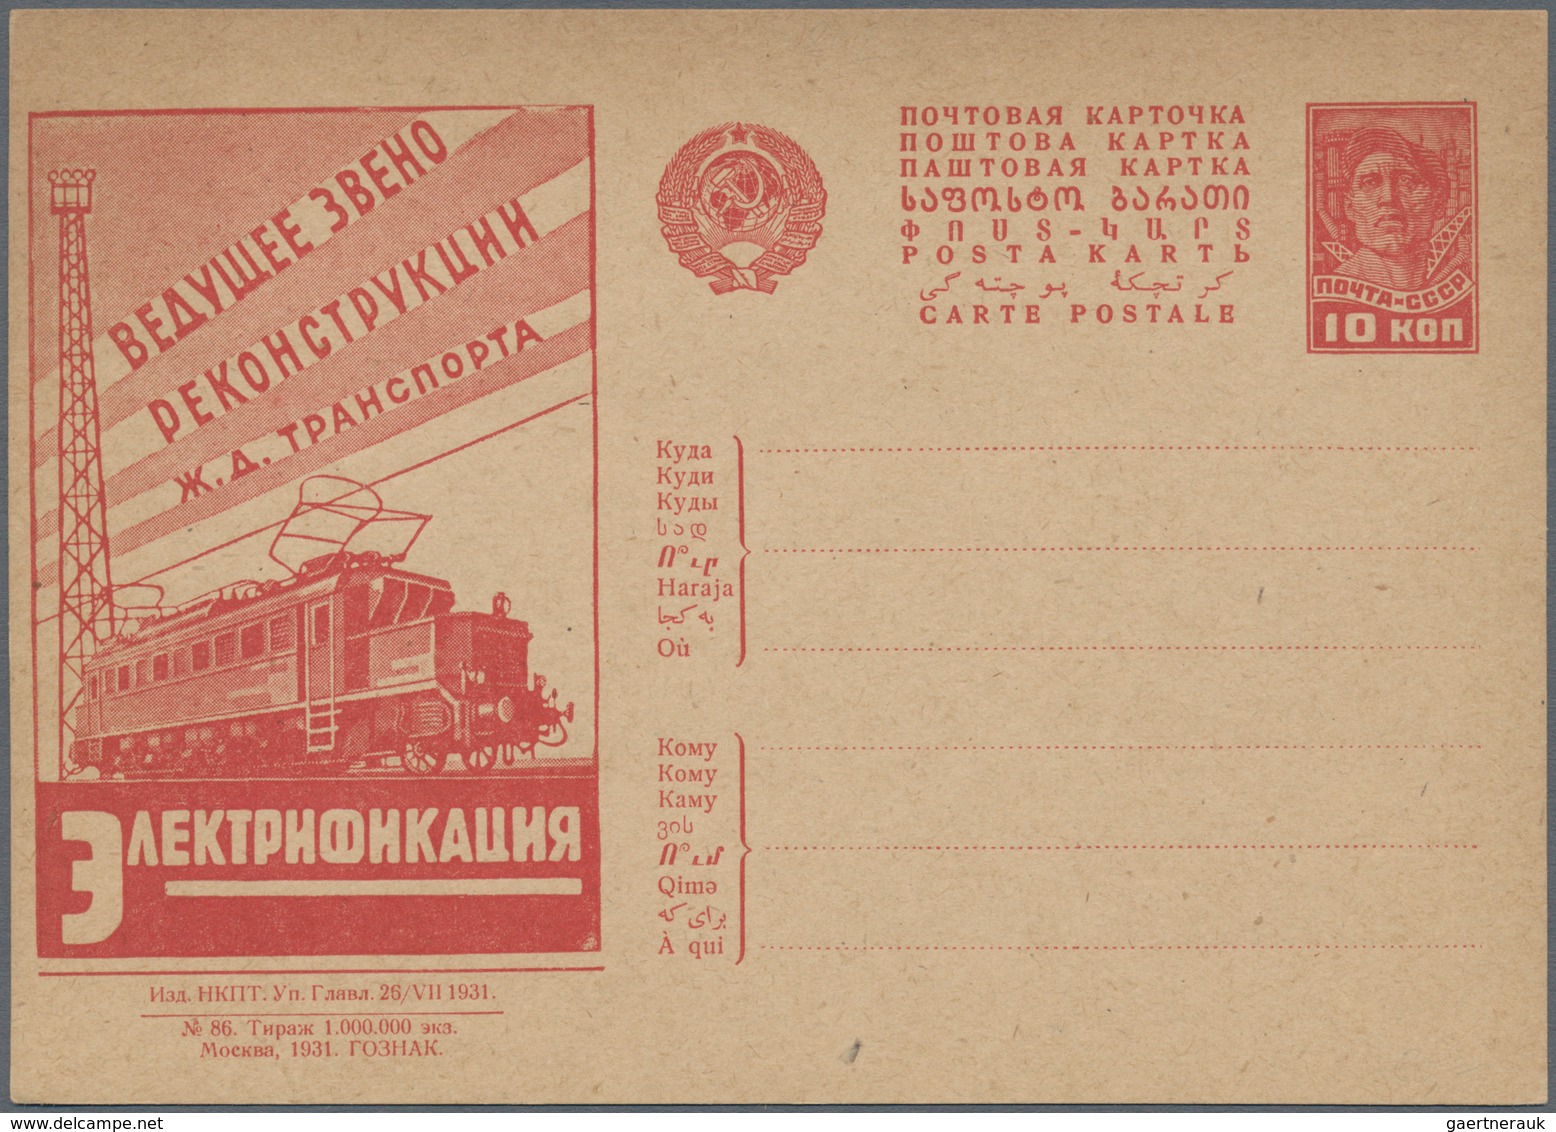 Sowjetunion - Ganzsachen: 1931/32, 4 different unused picture postcards with motive railway